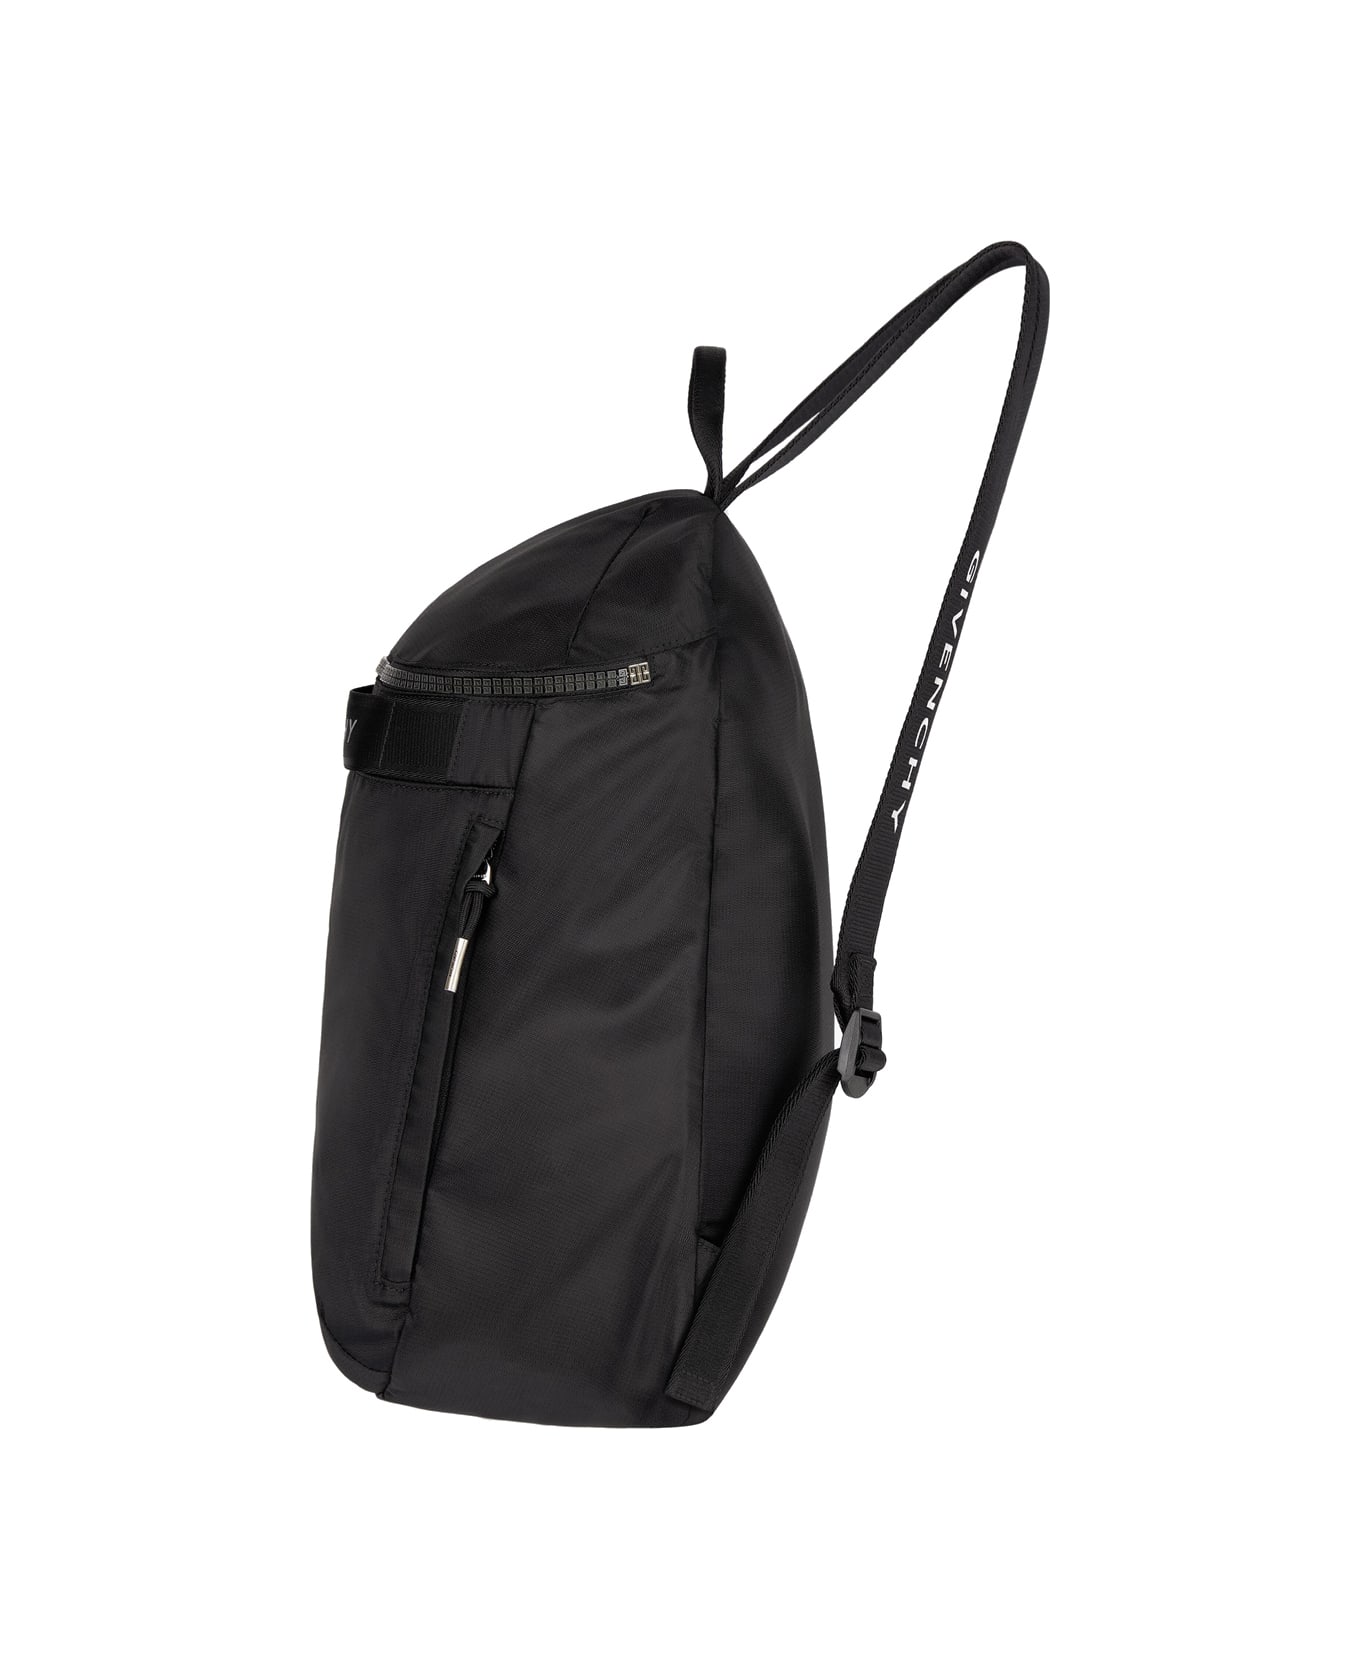 Givenchy G-trek Backpack In Black Nylon - Nero